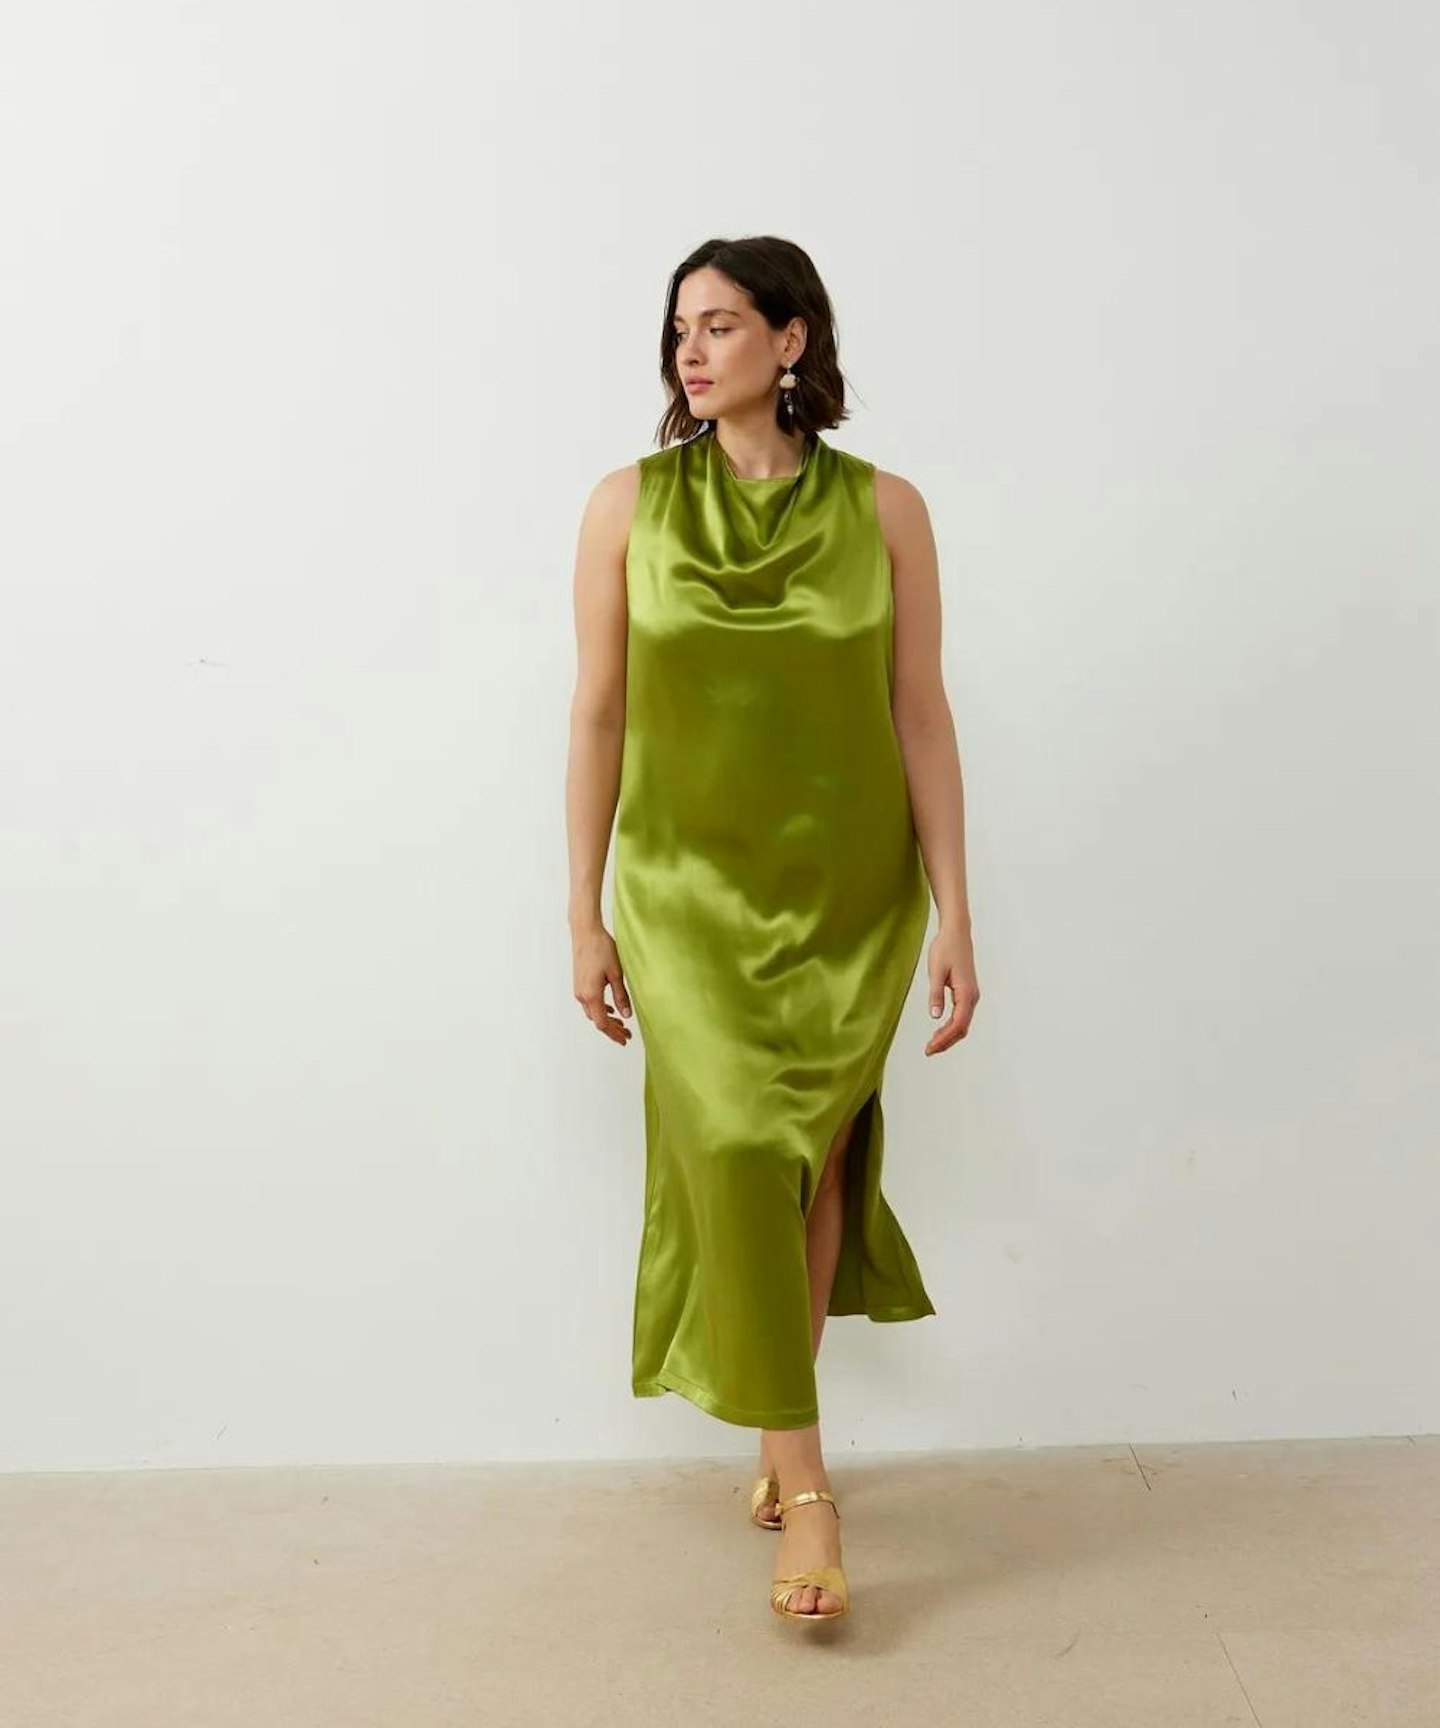 Green Satin Cowl Neck Midi Dress